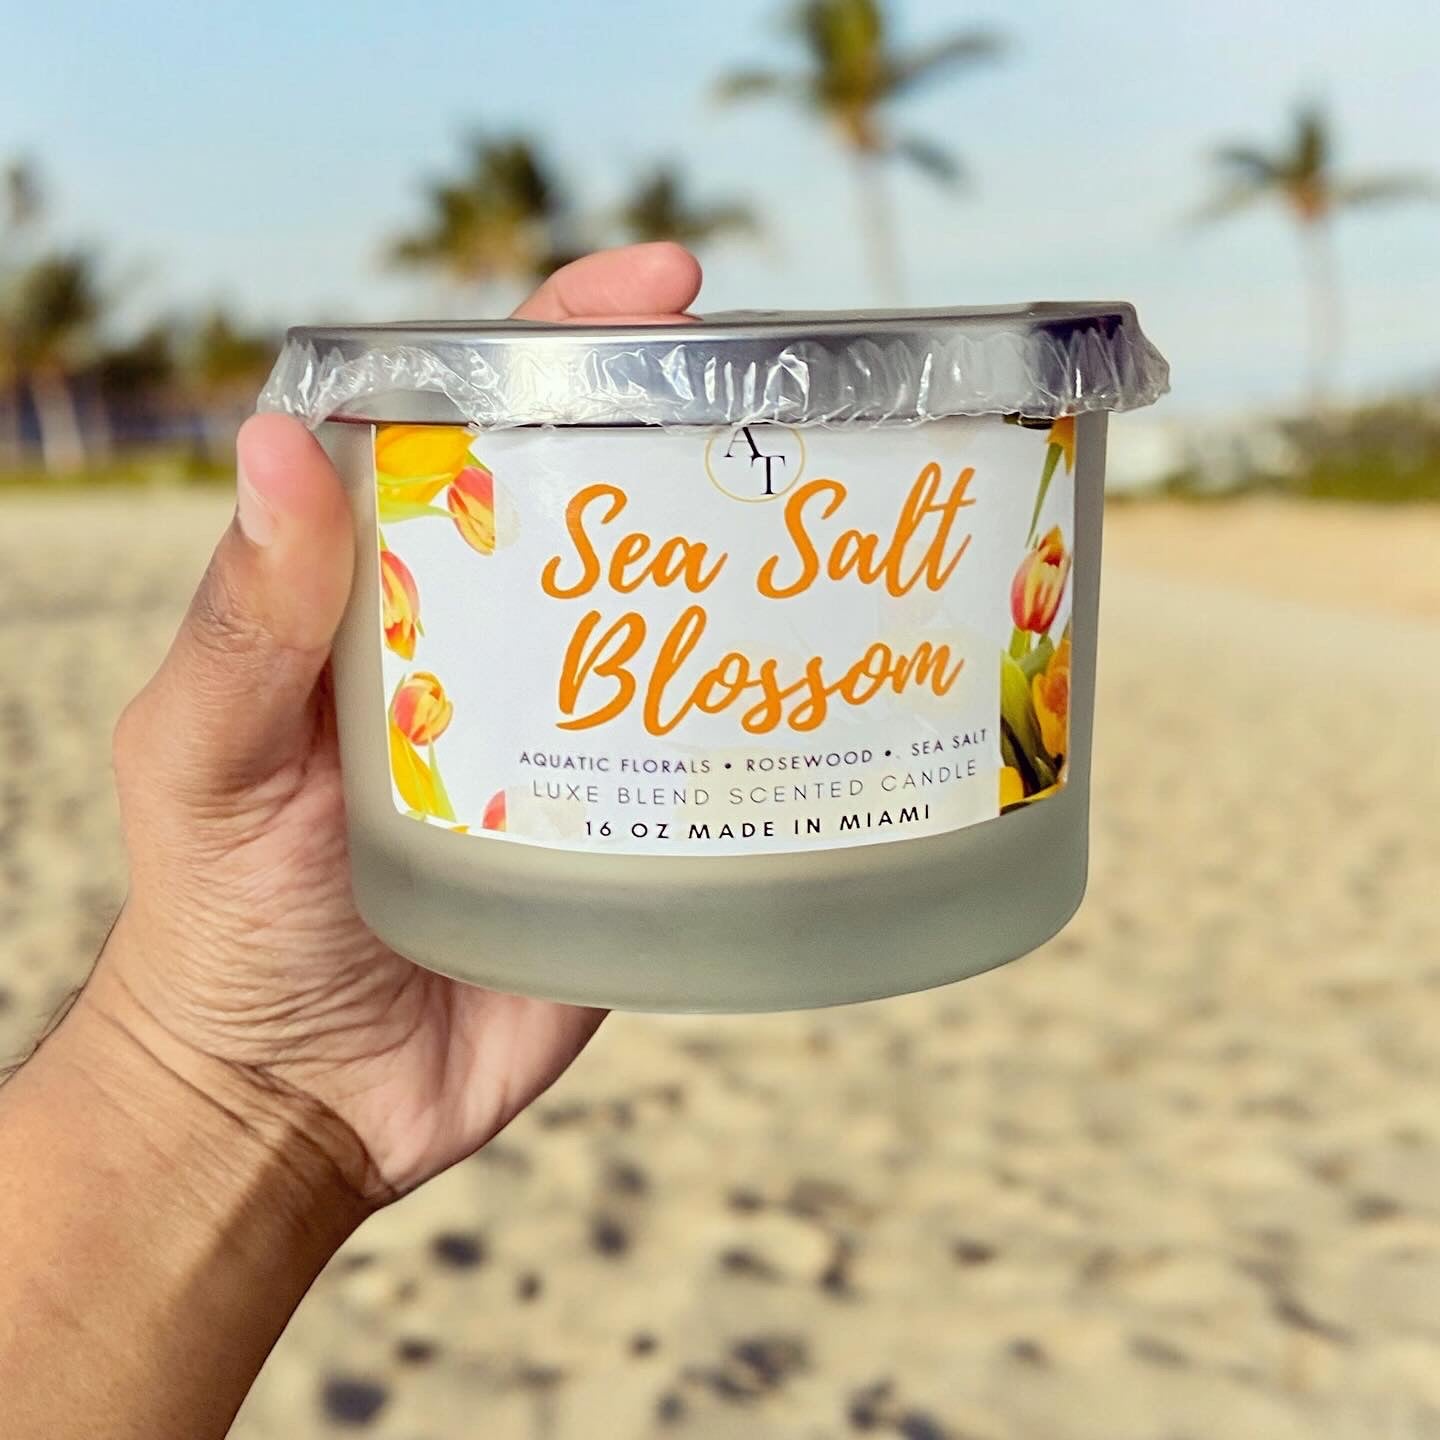 Sea Salt Blossom Candle